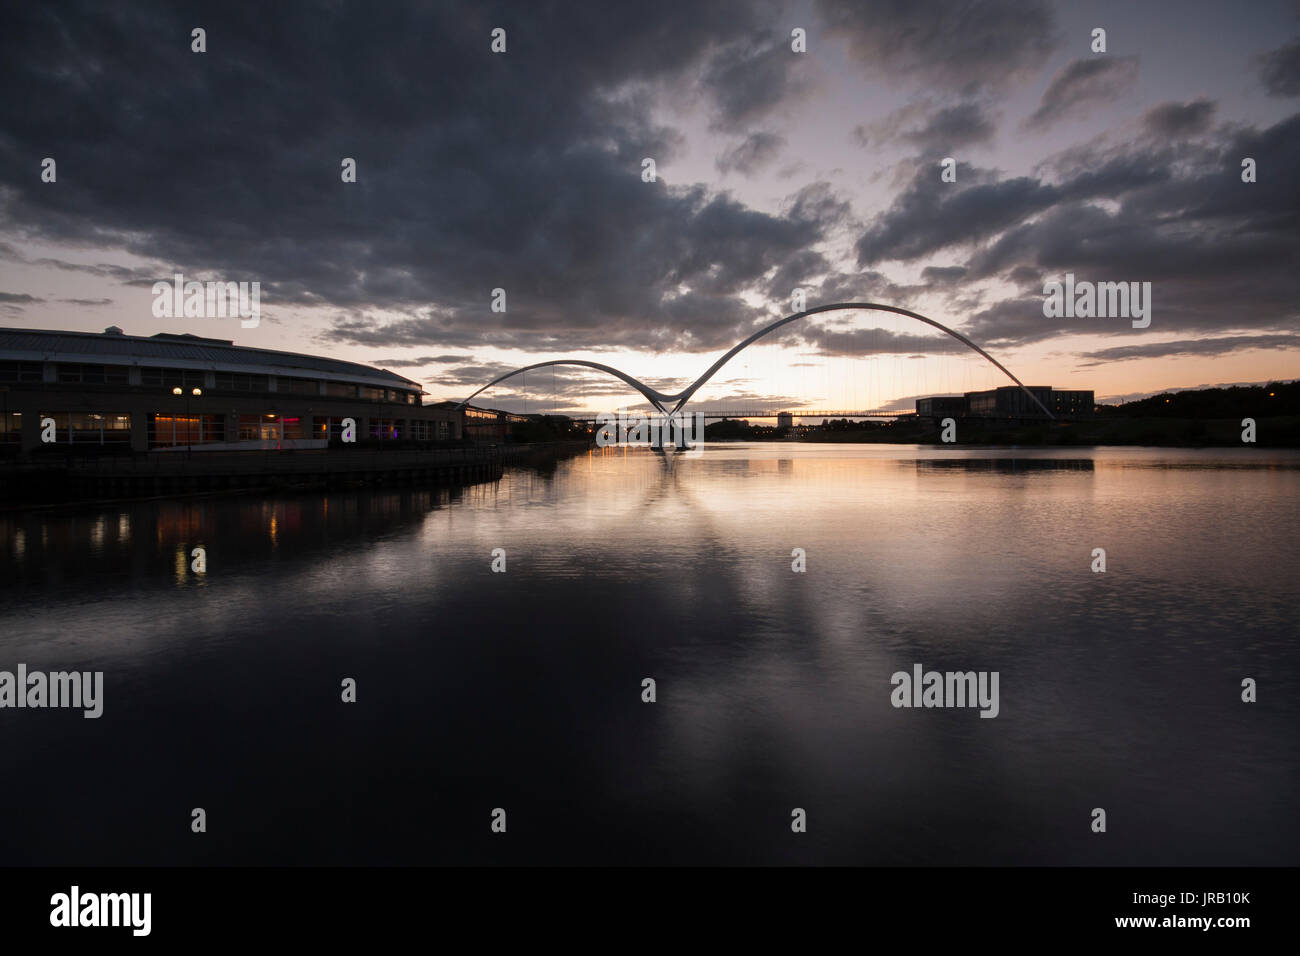 L'Infini,Pont Stockton-on-Tees, Angleterre, Royaume-Uni Banque D'Images